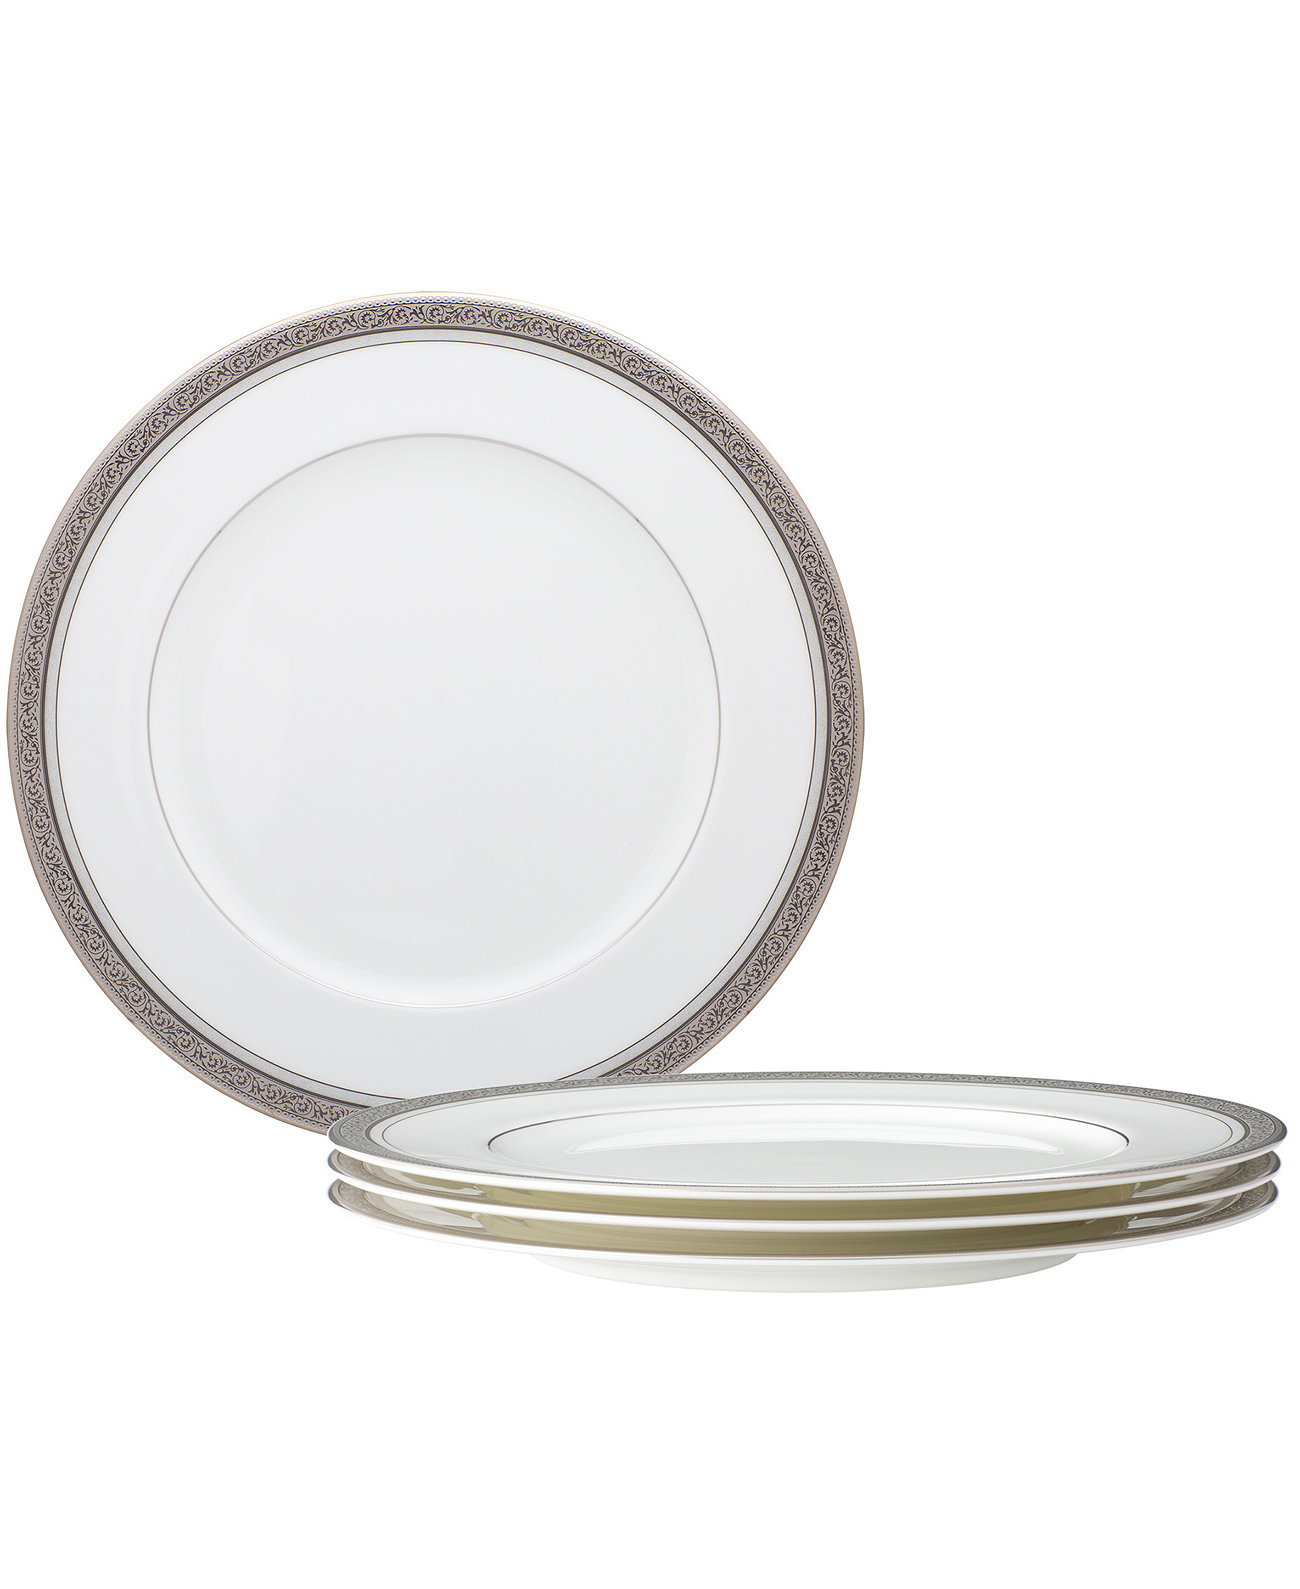 Summit Platinum Набор из 4 обеденных тарелок, сервиз на 4 персоны Noritake